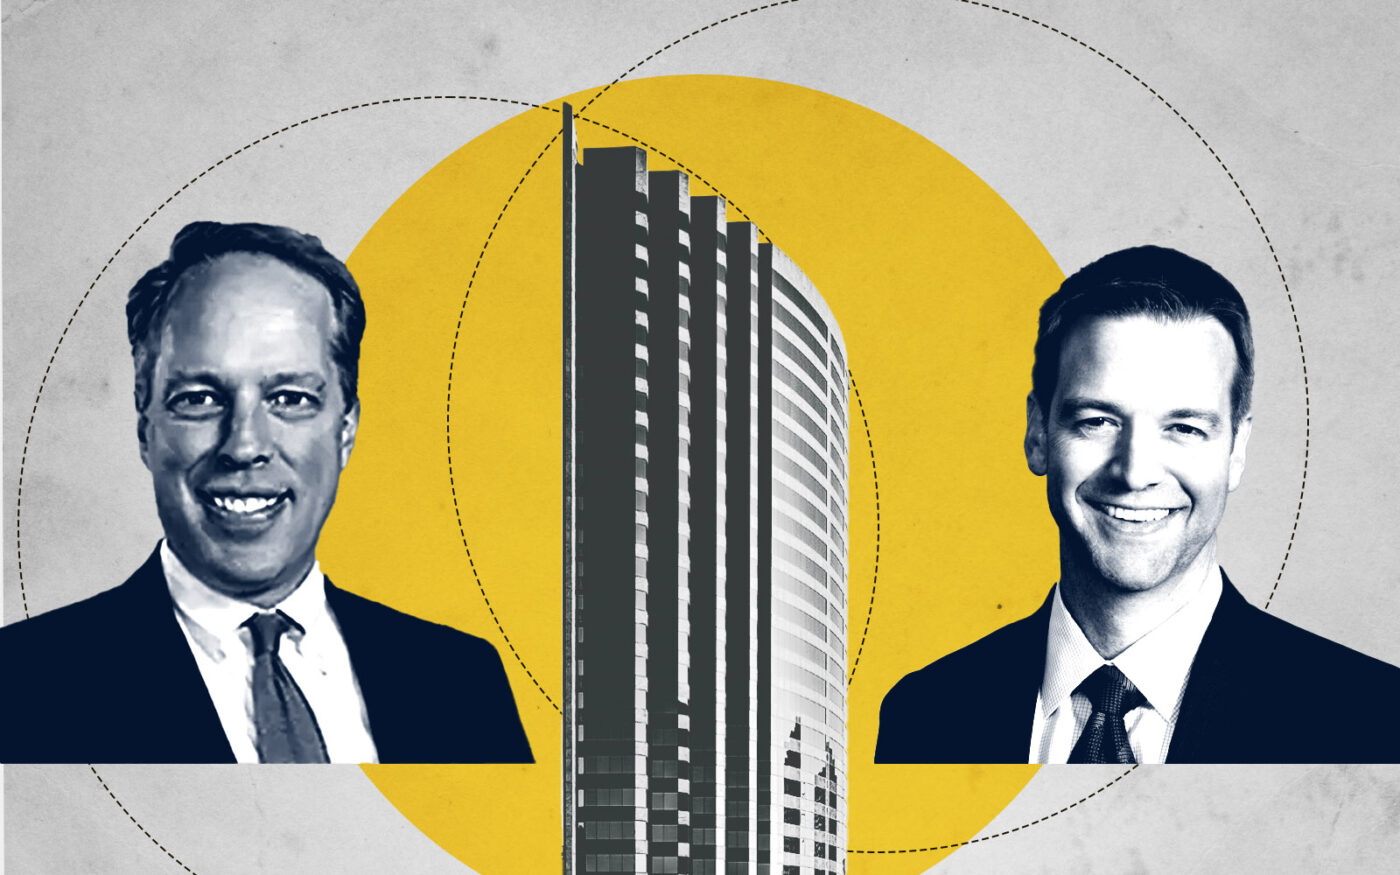 New York Life Investors' Mark Talgo; Pinnacle Tower, Stream Realty's JJ Leonard (New York Life, Stream Realty, Getty)